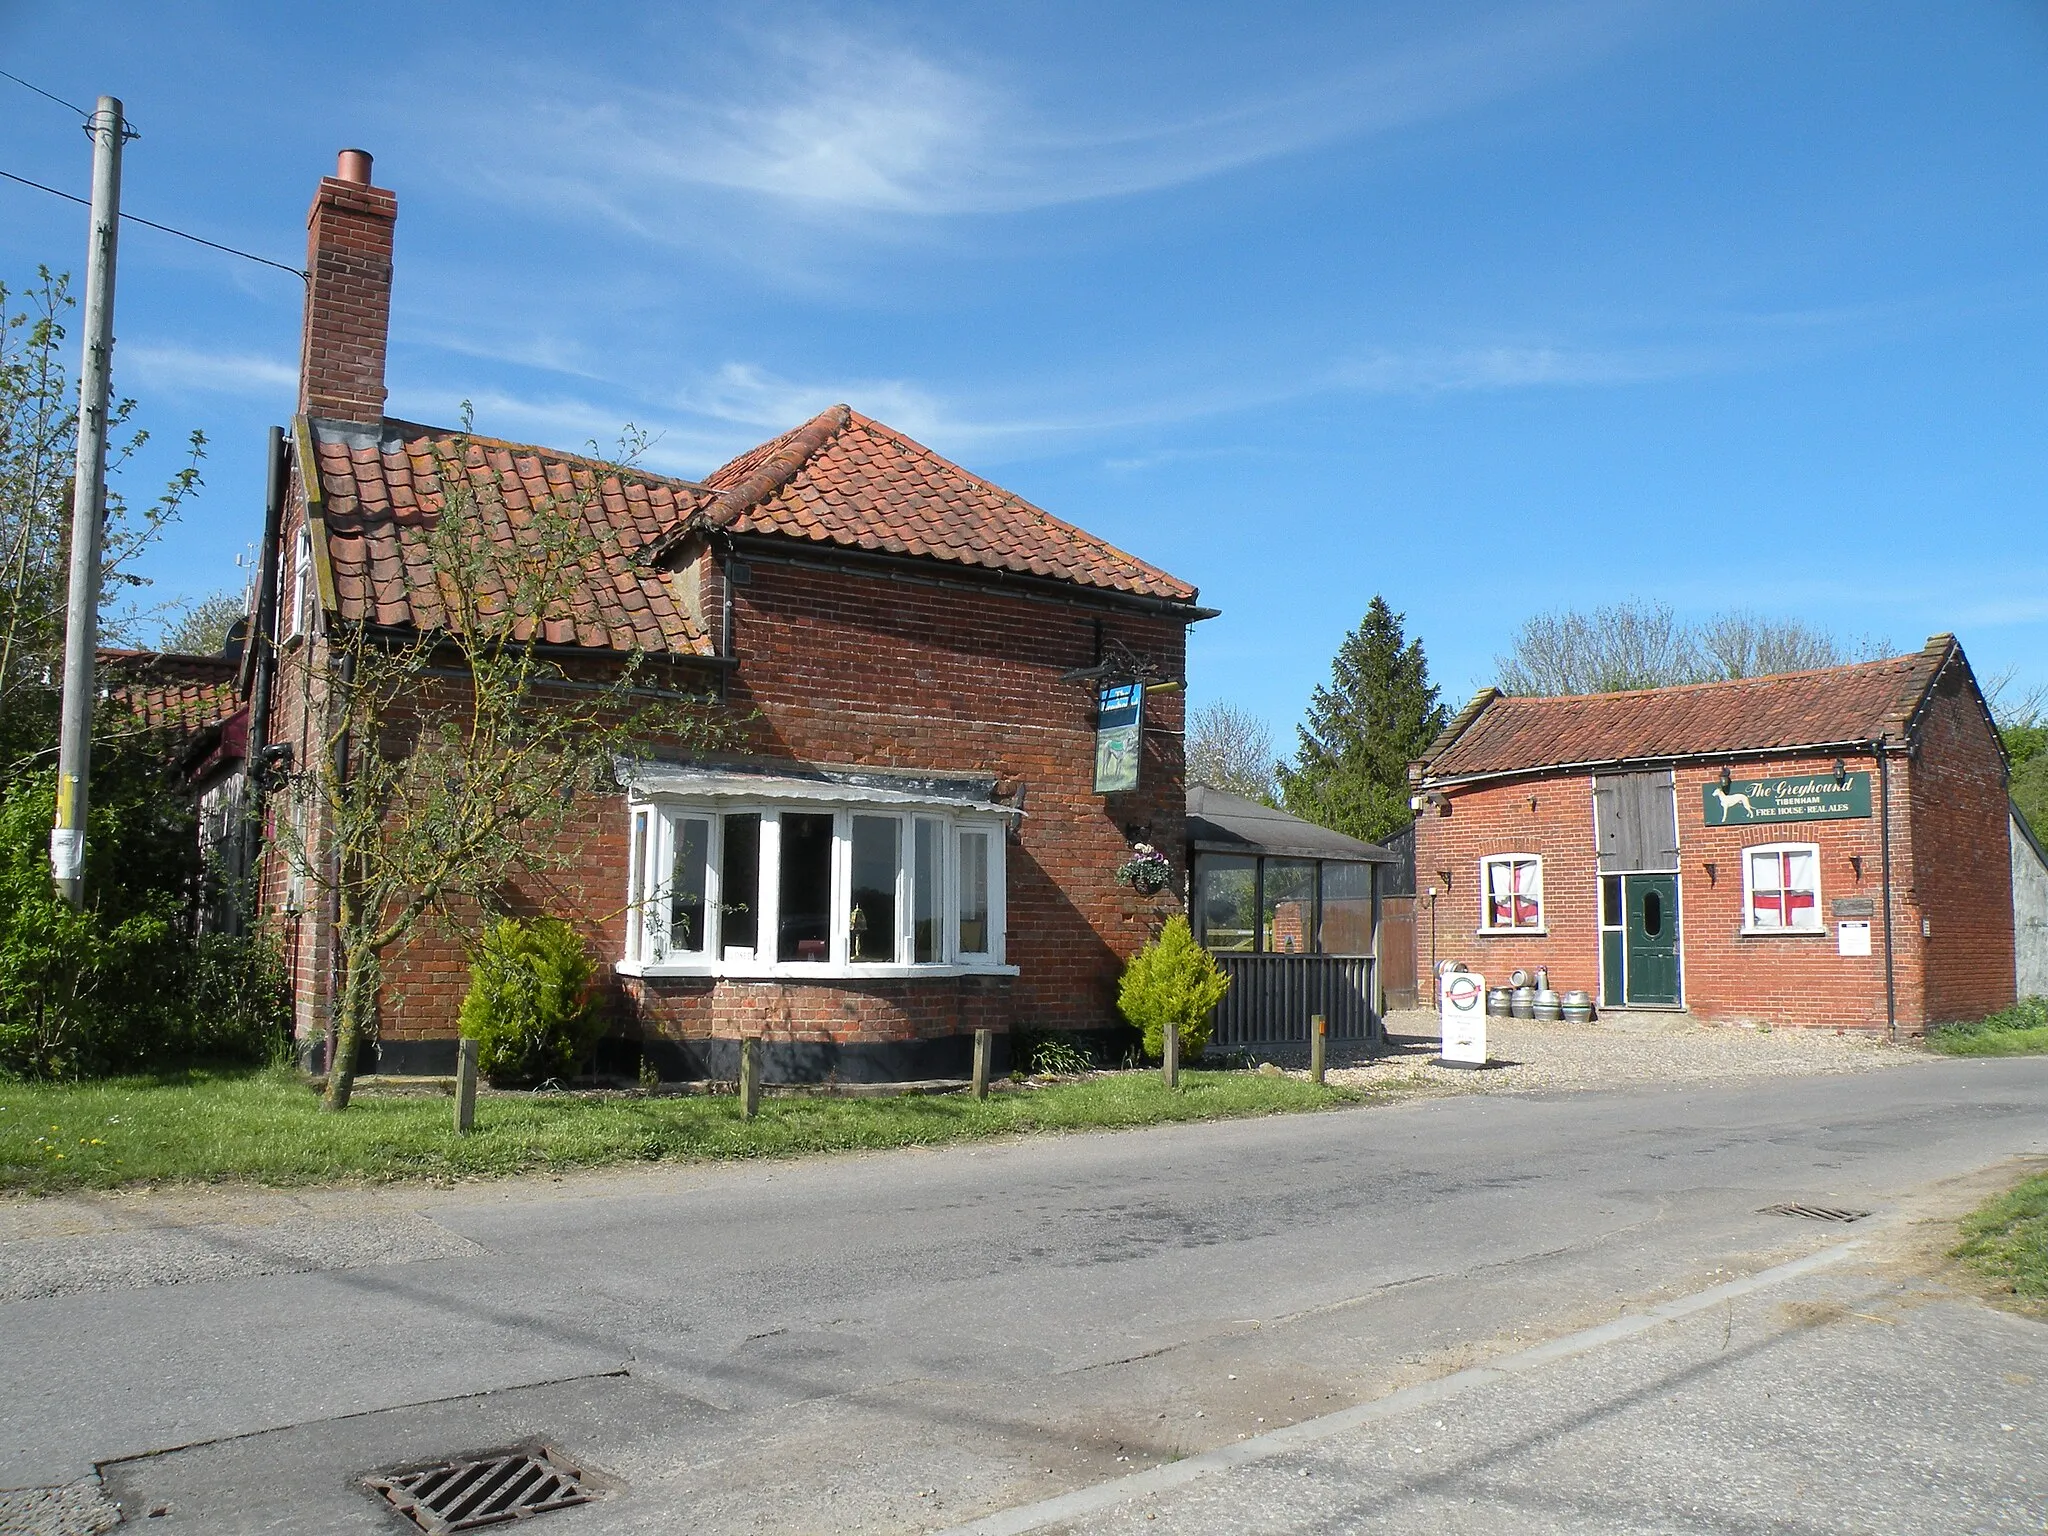 Photo showing: 'The Greyhound' public house at Tibenham